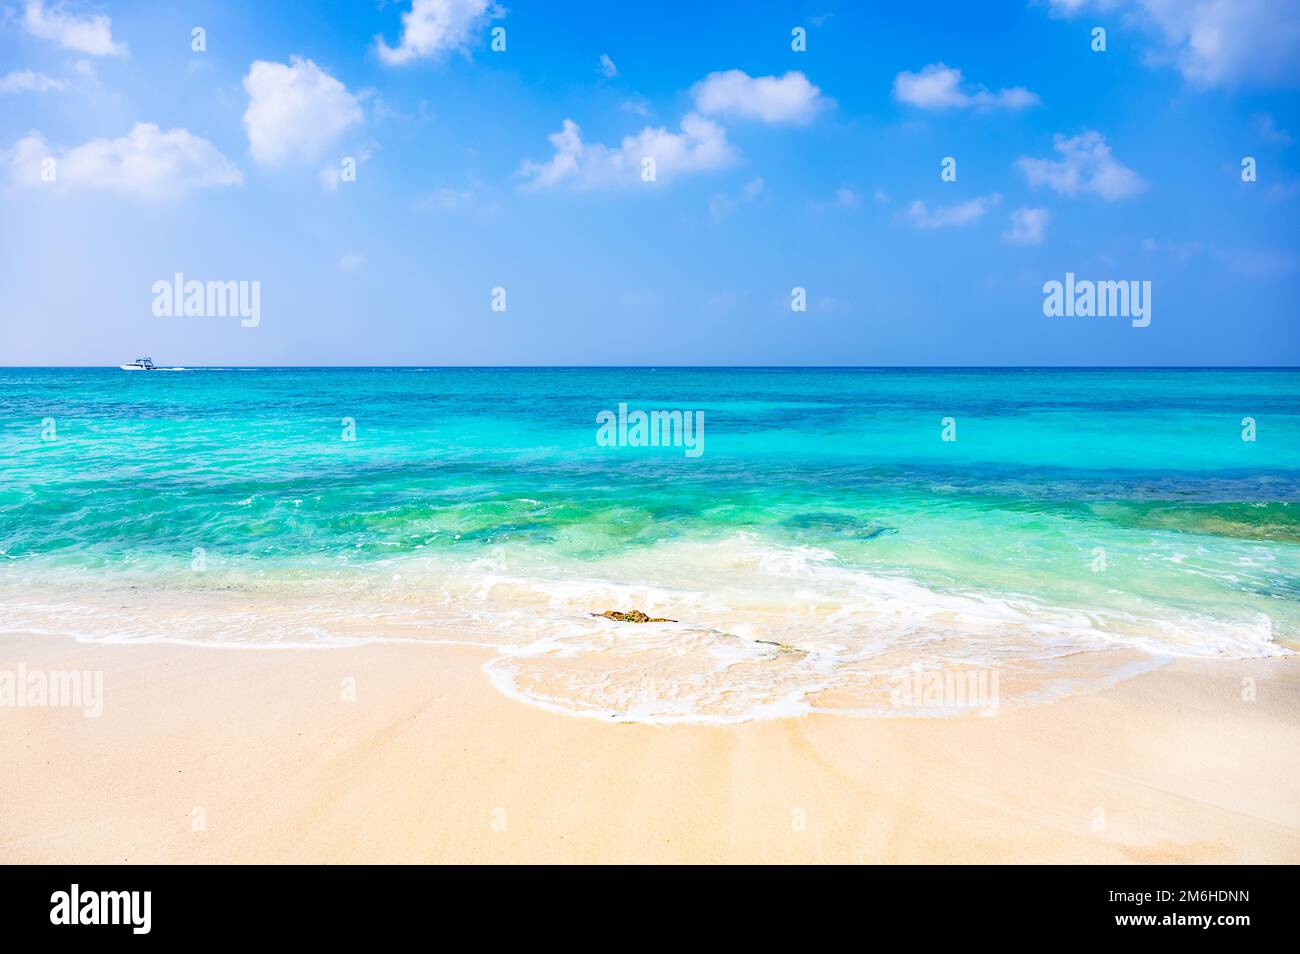 Magical paradise beach of the Caribbean sea Stock Photo